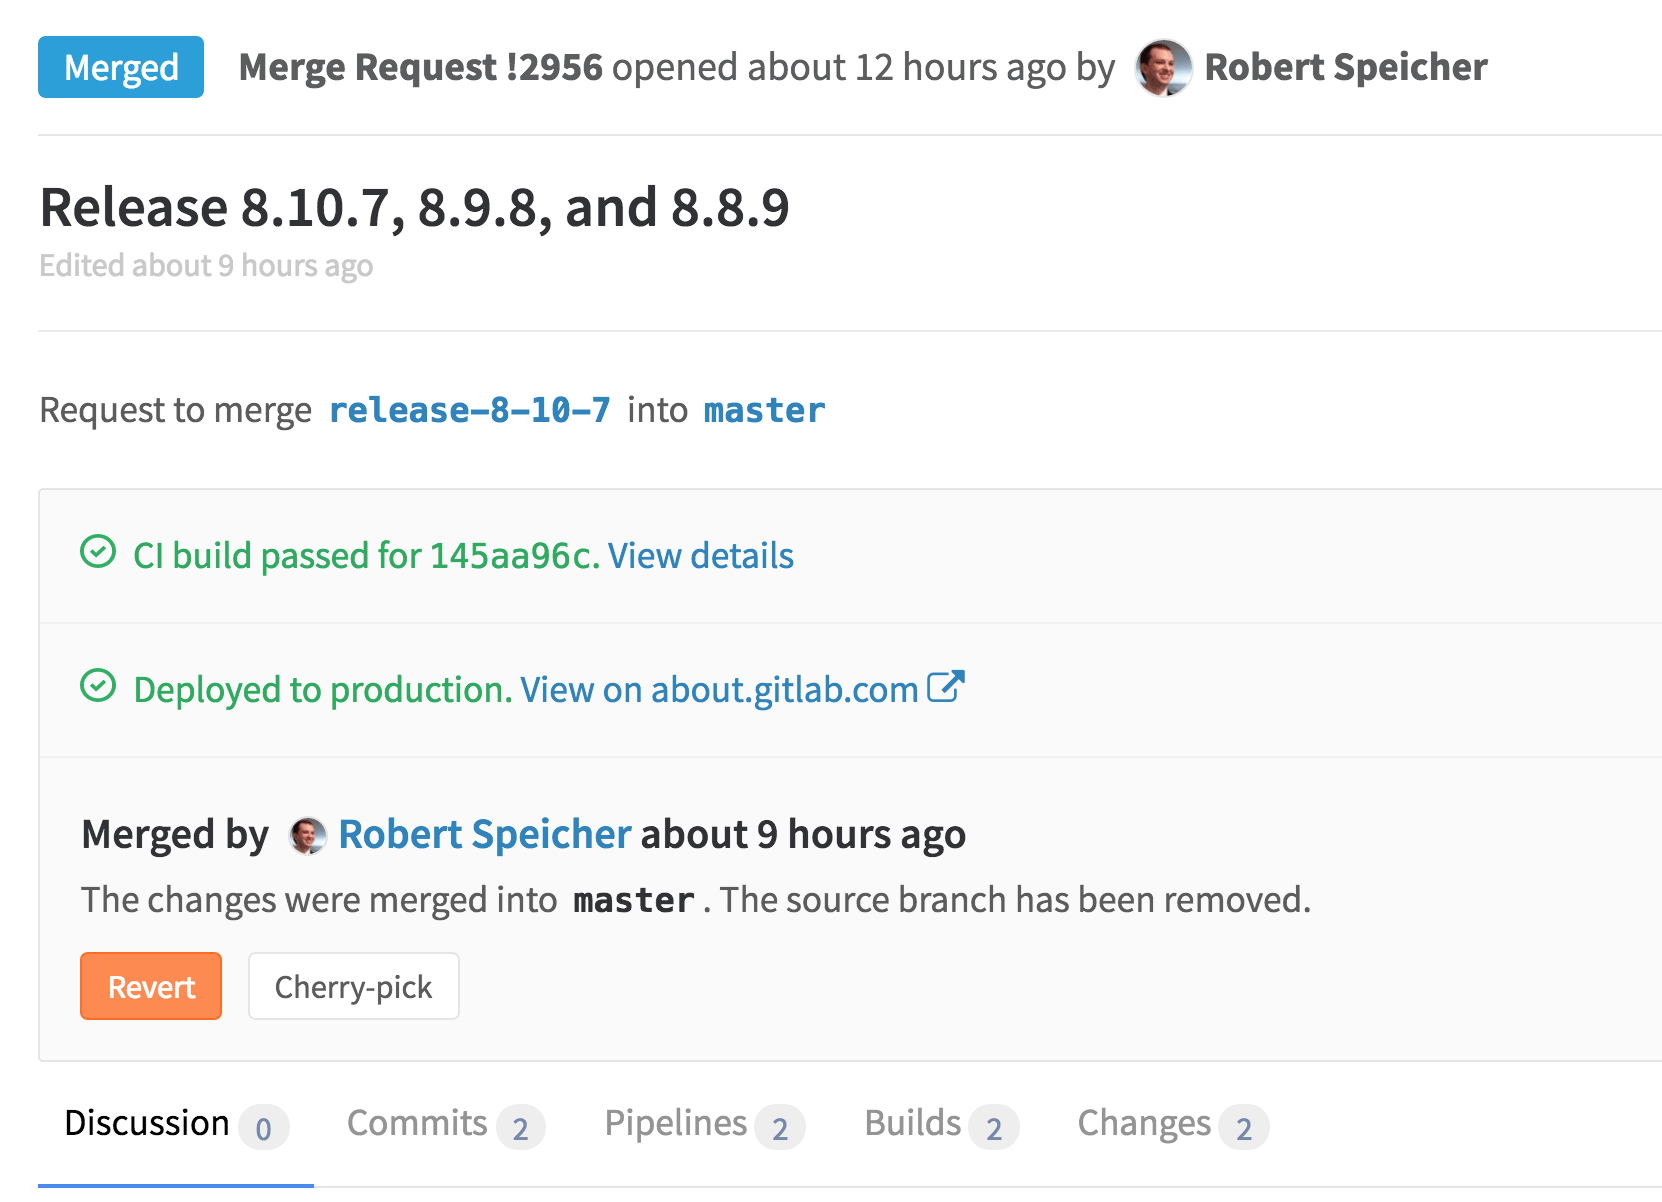 See deploy status in merge request in GitLab 8.11